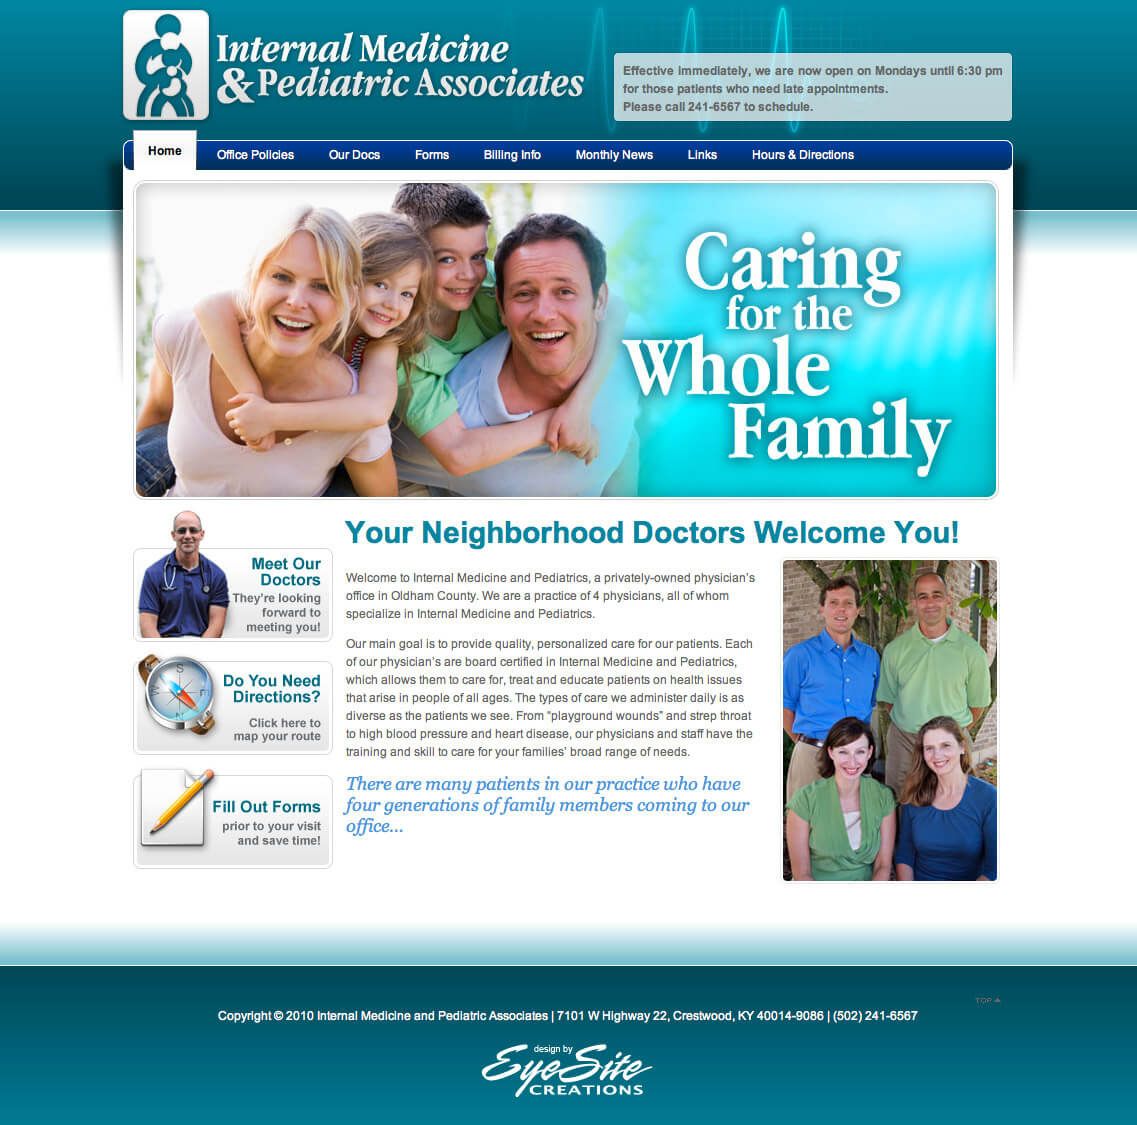 Internal Medicine & Pediatrics website by EyeSite Creations